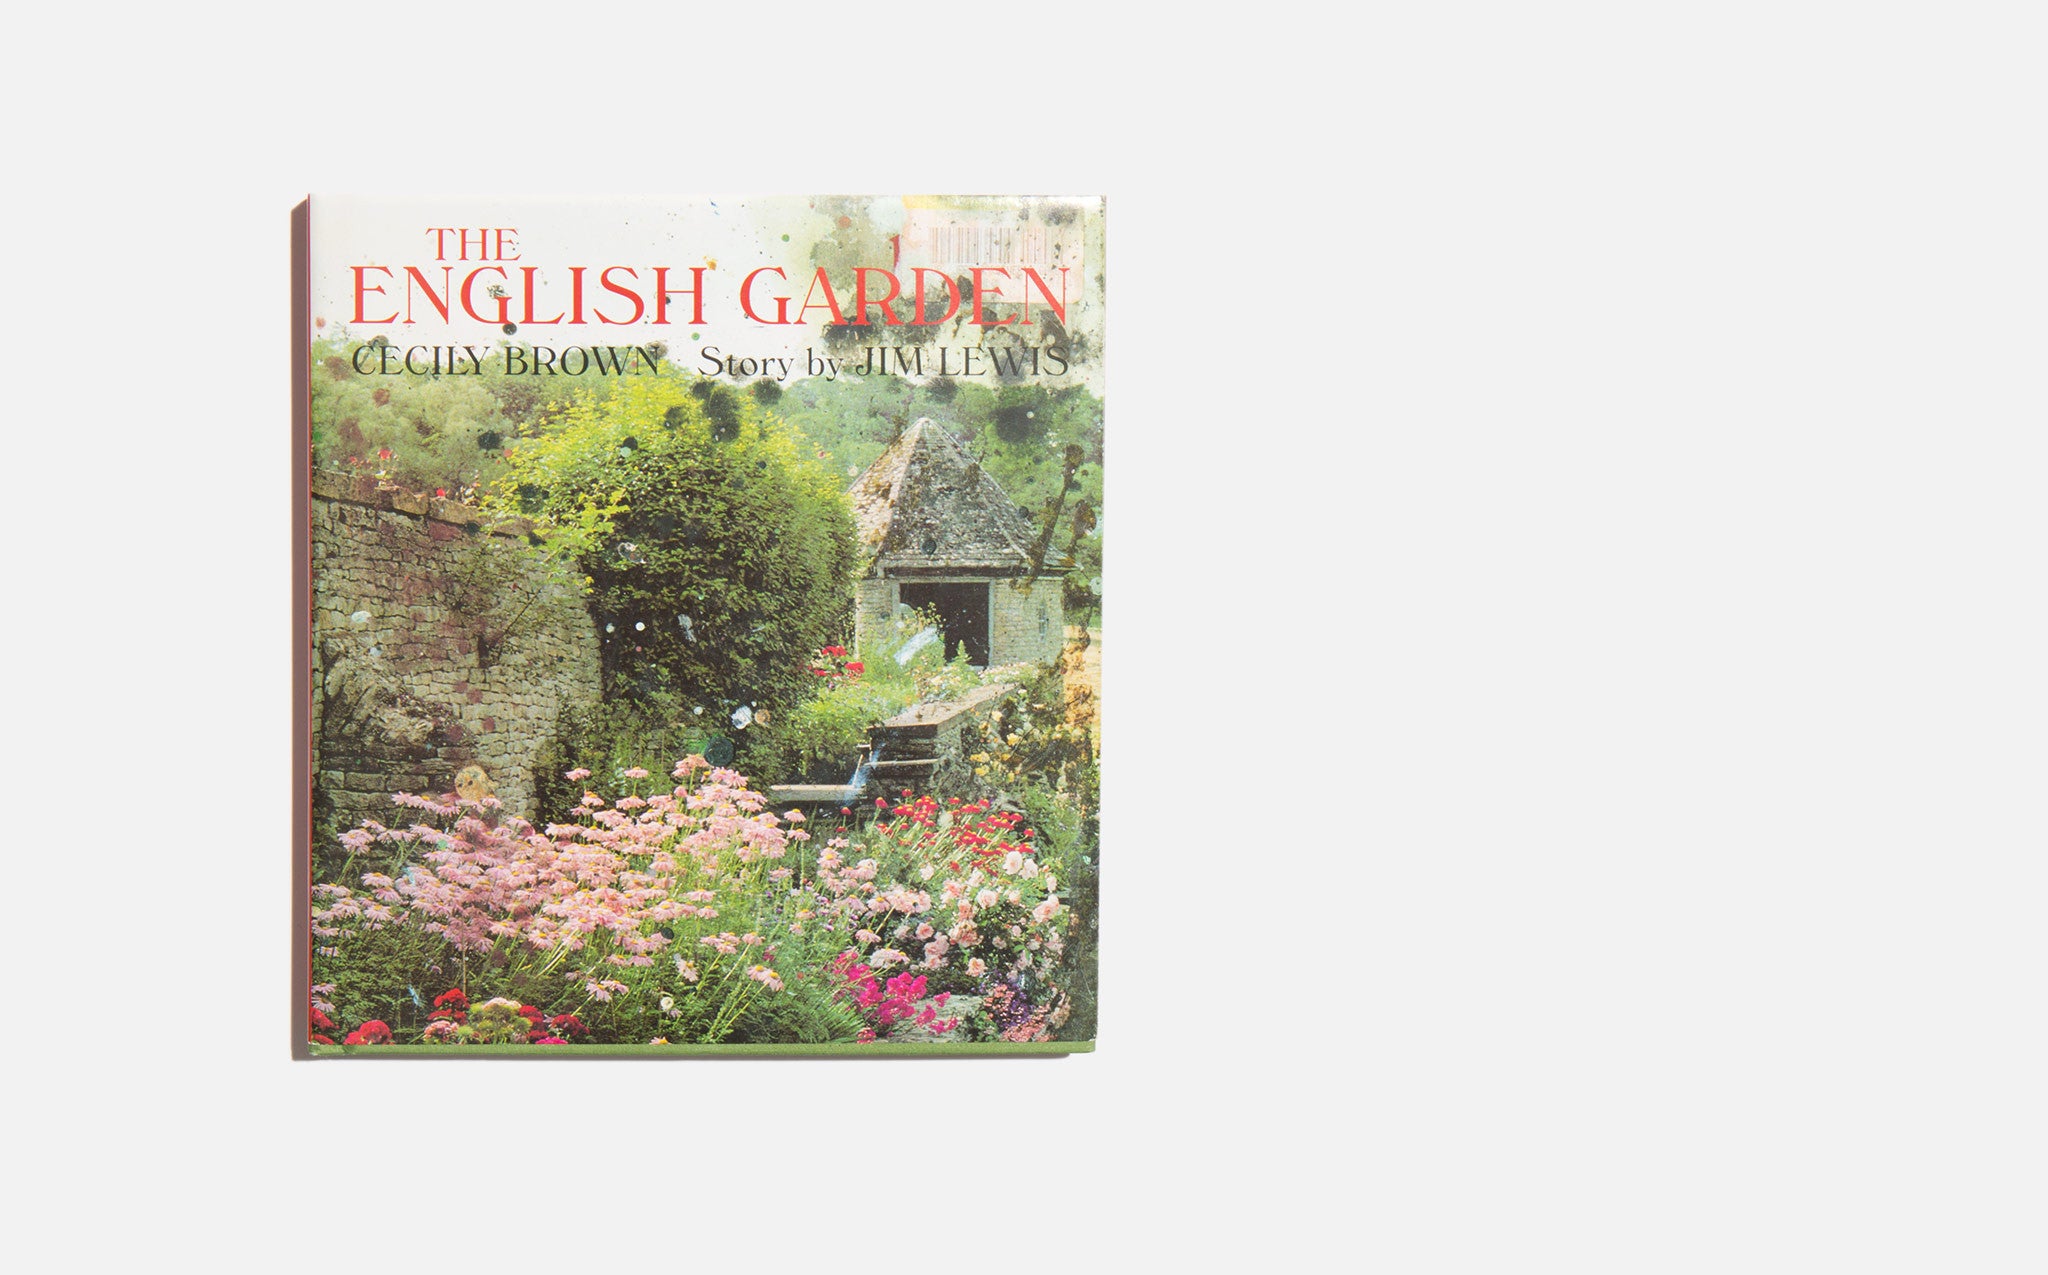 The English Garden - Cecily Brown & Jim Lewis